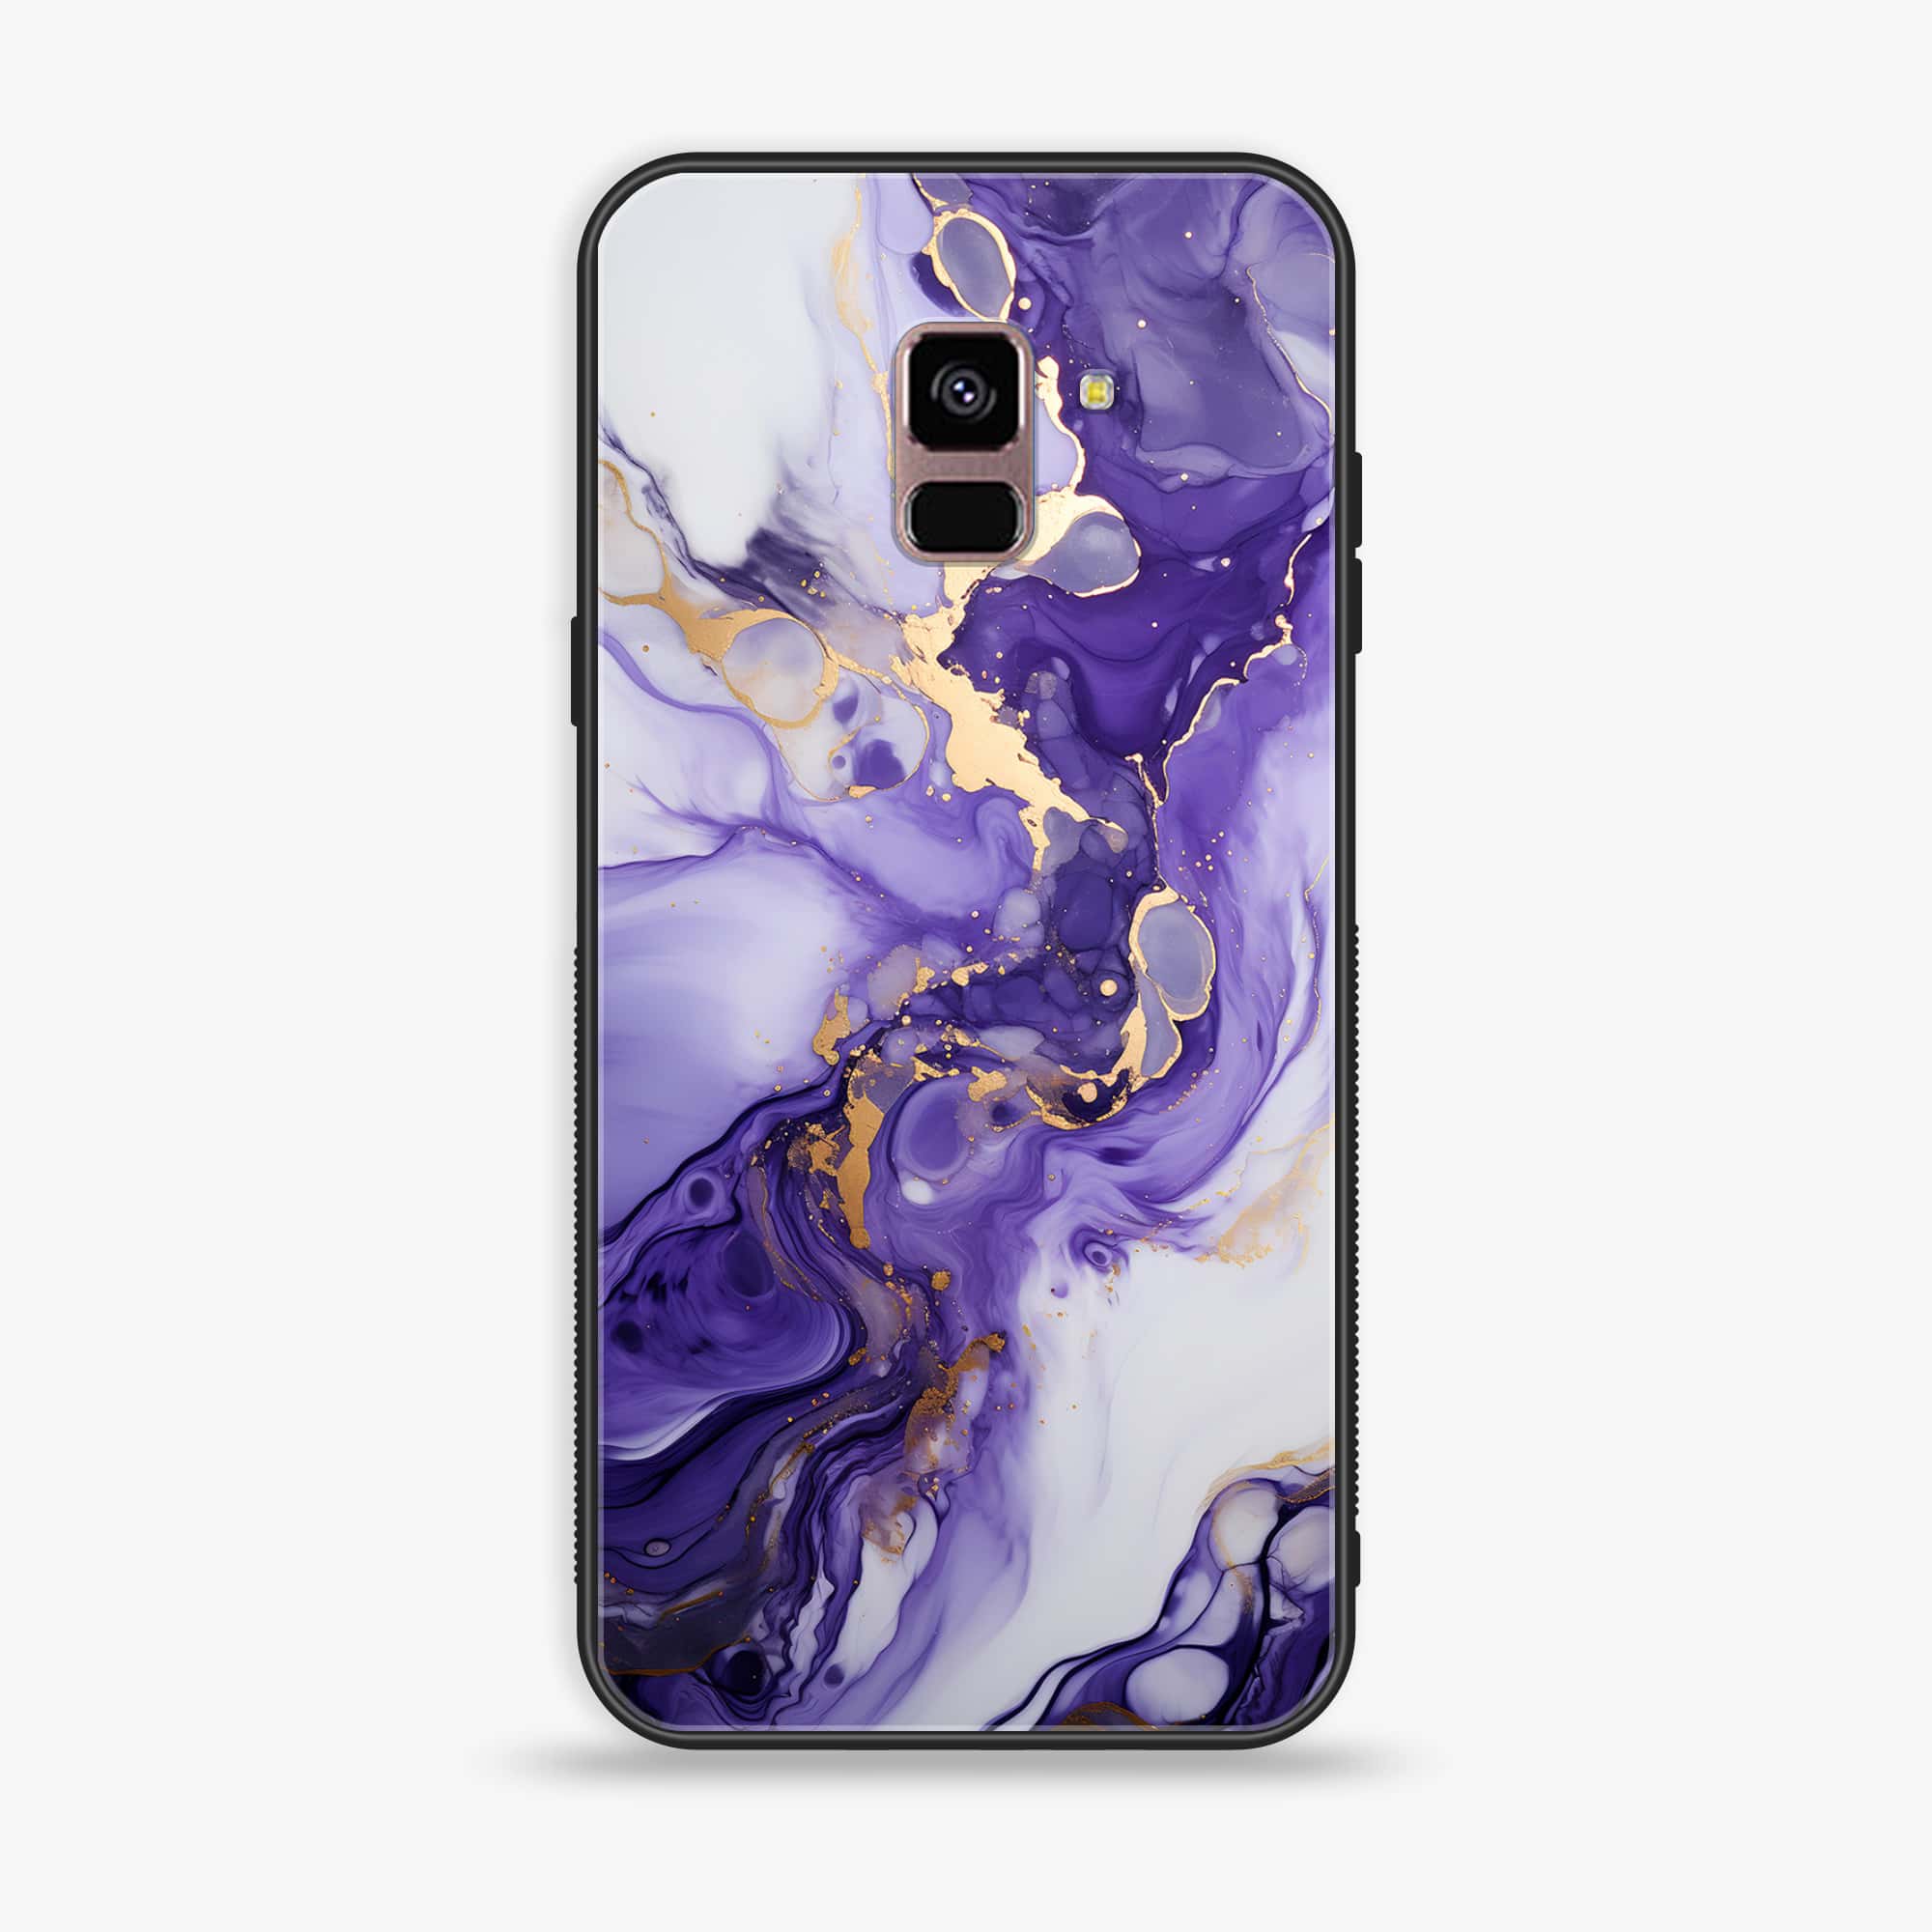 Samsung Galaxy A8+ (2018) - Liquid Marble 2.0 Series - Premium Printed Glass soft Bumper shock Proof Case